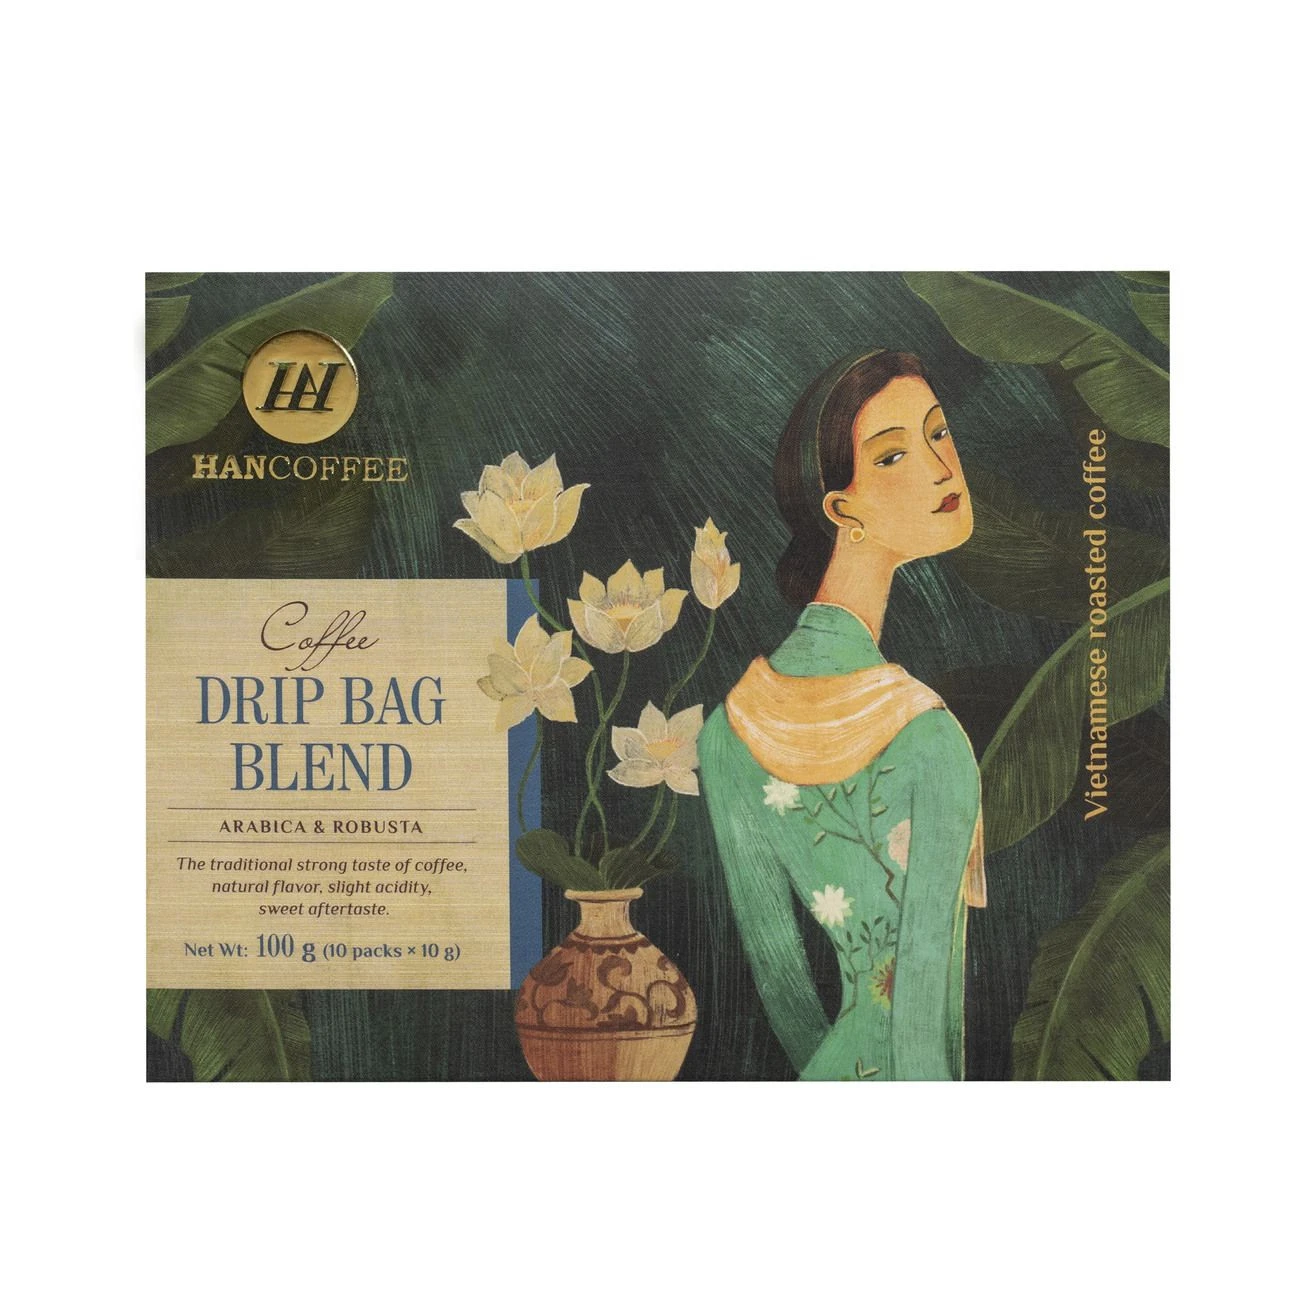 Idd Corporation Jsc HANCOFFEE Filter/Drip Bag Blend & Arabica Premium High-quality Coffee